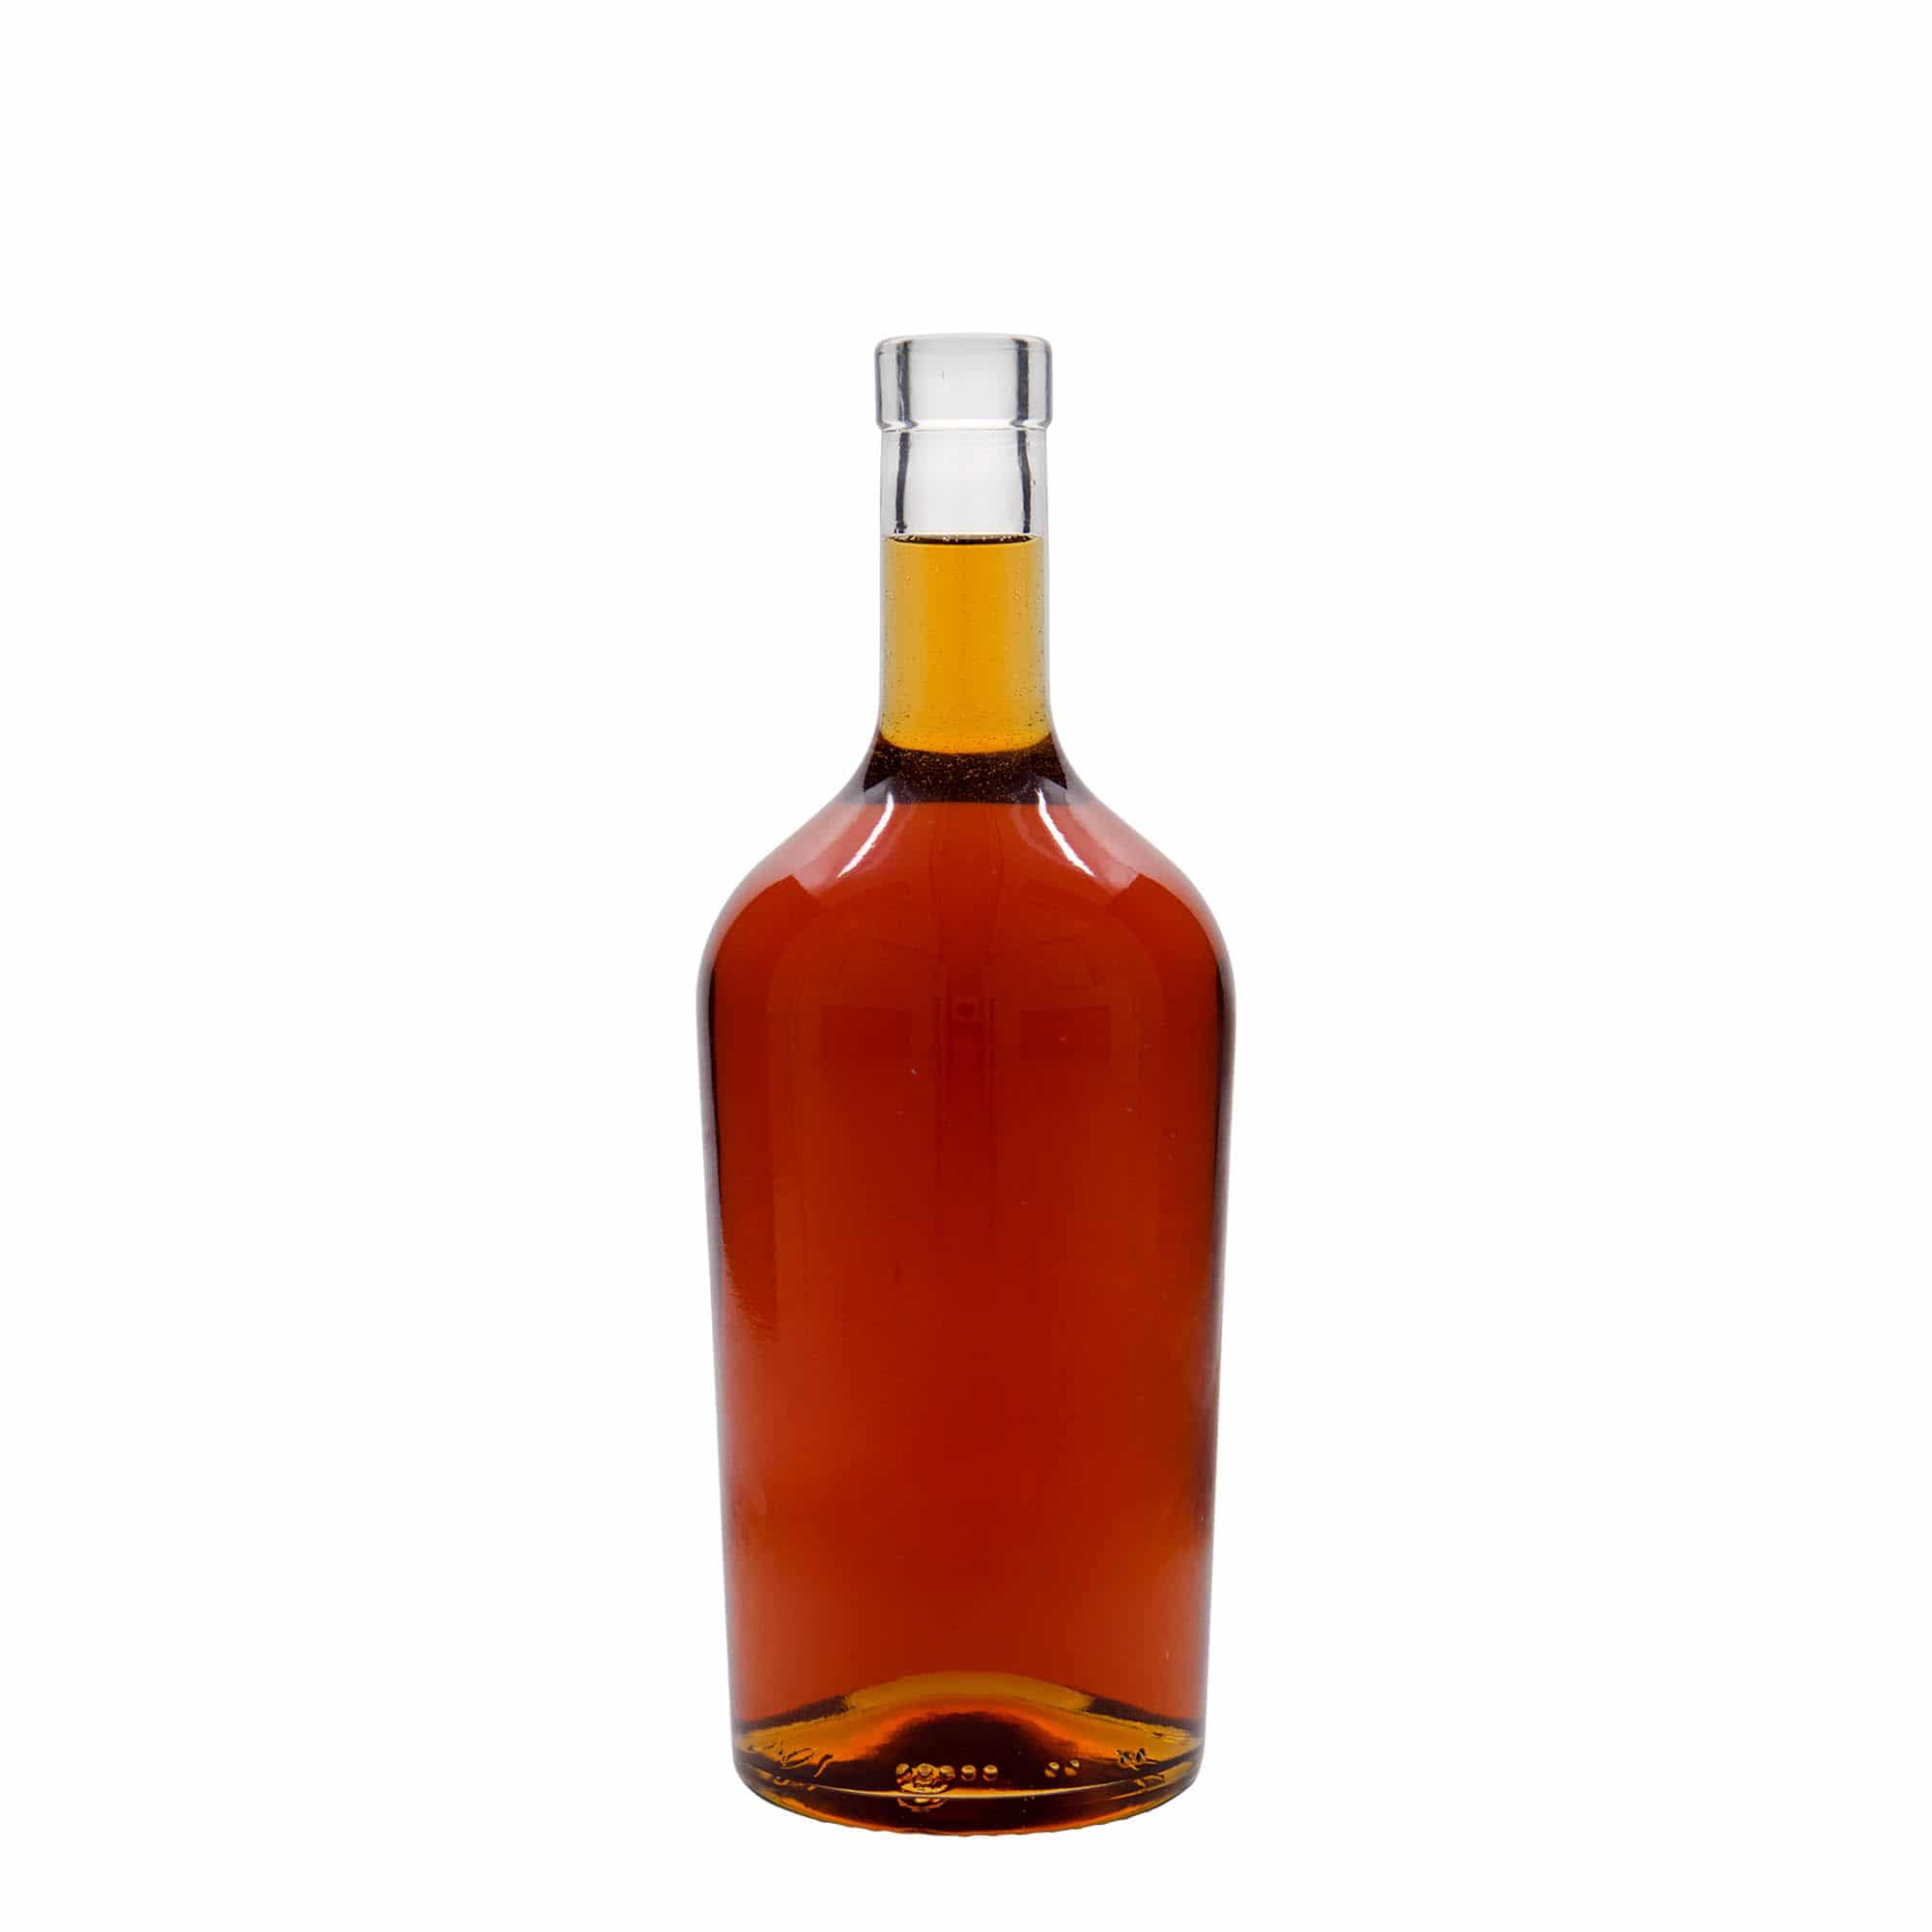 700 ml glass bottle 'Margarethe', closure: cork